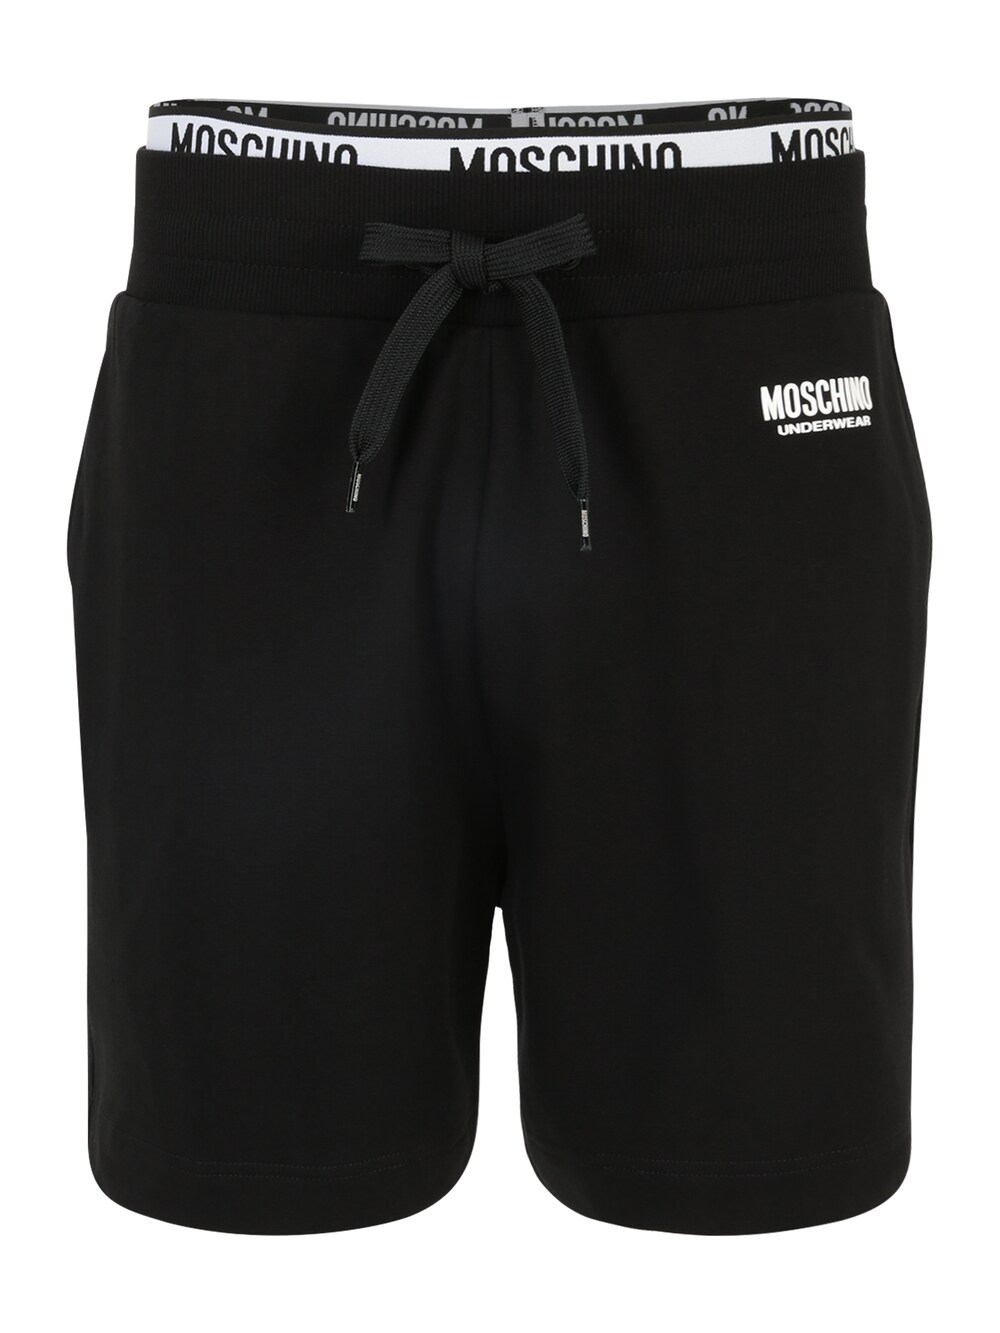 Обычные брюки Moschino Underwear, черный